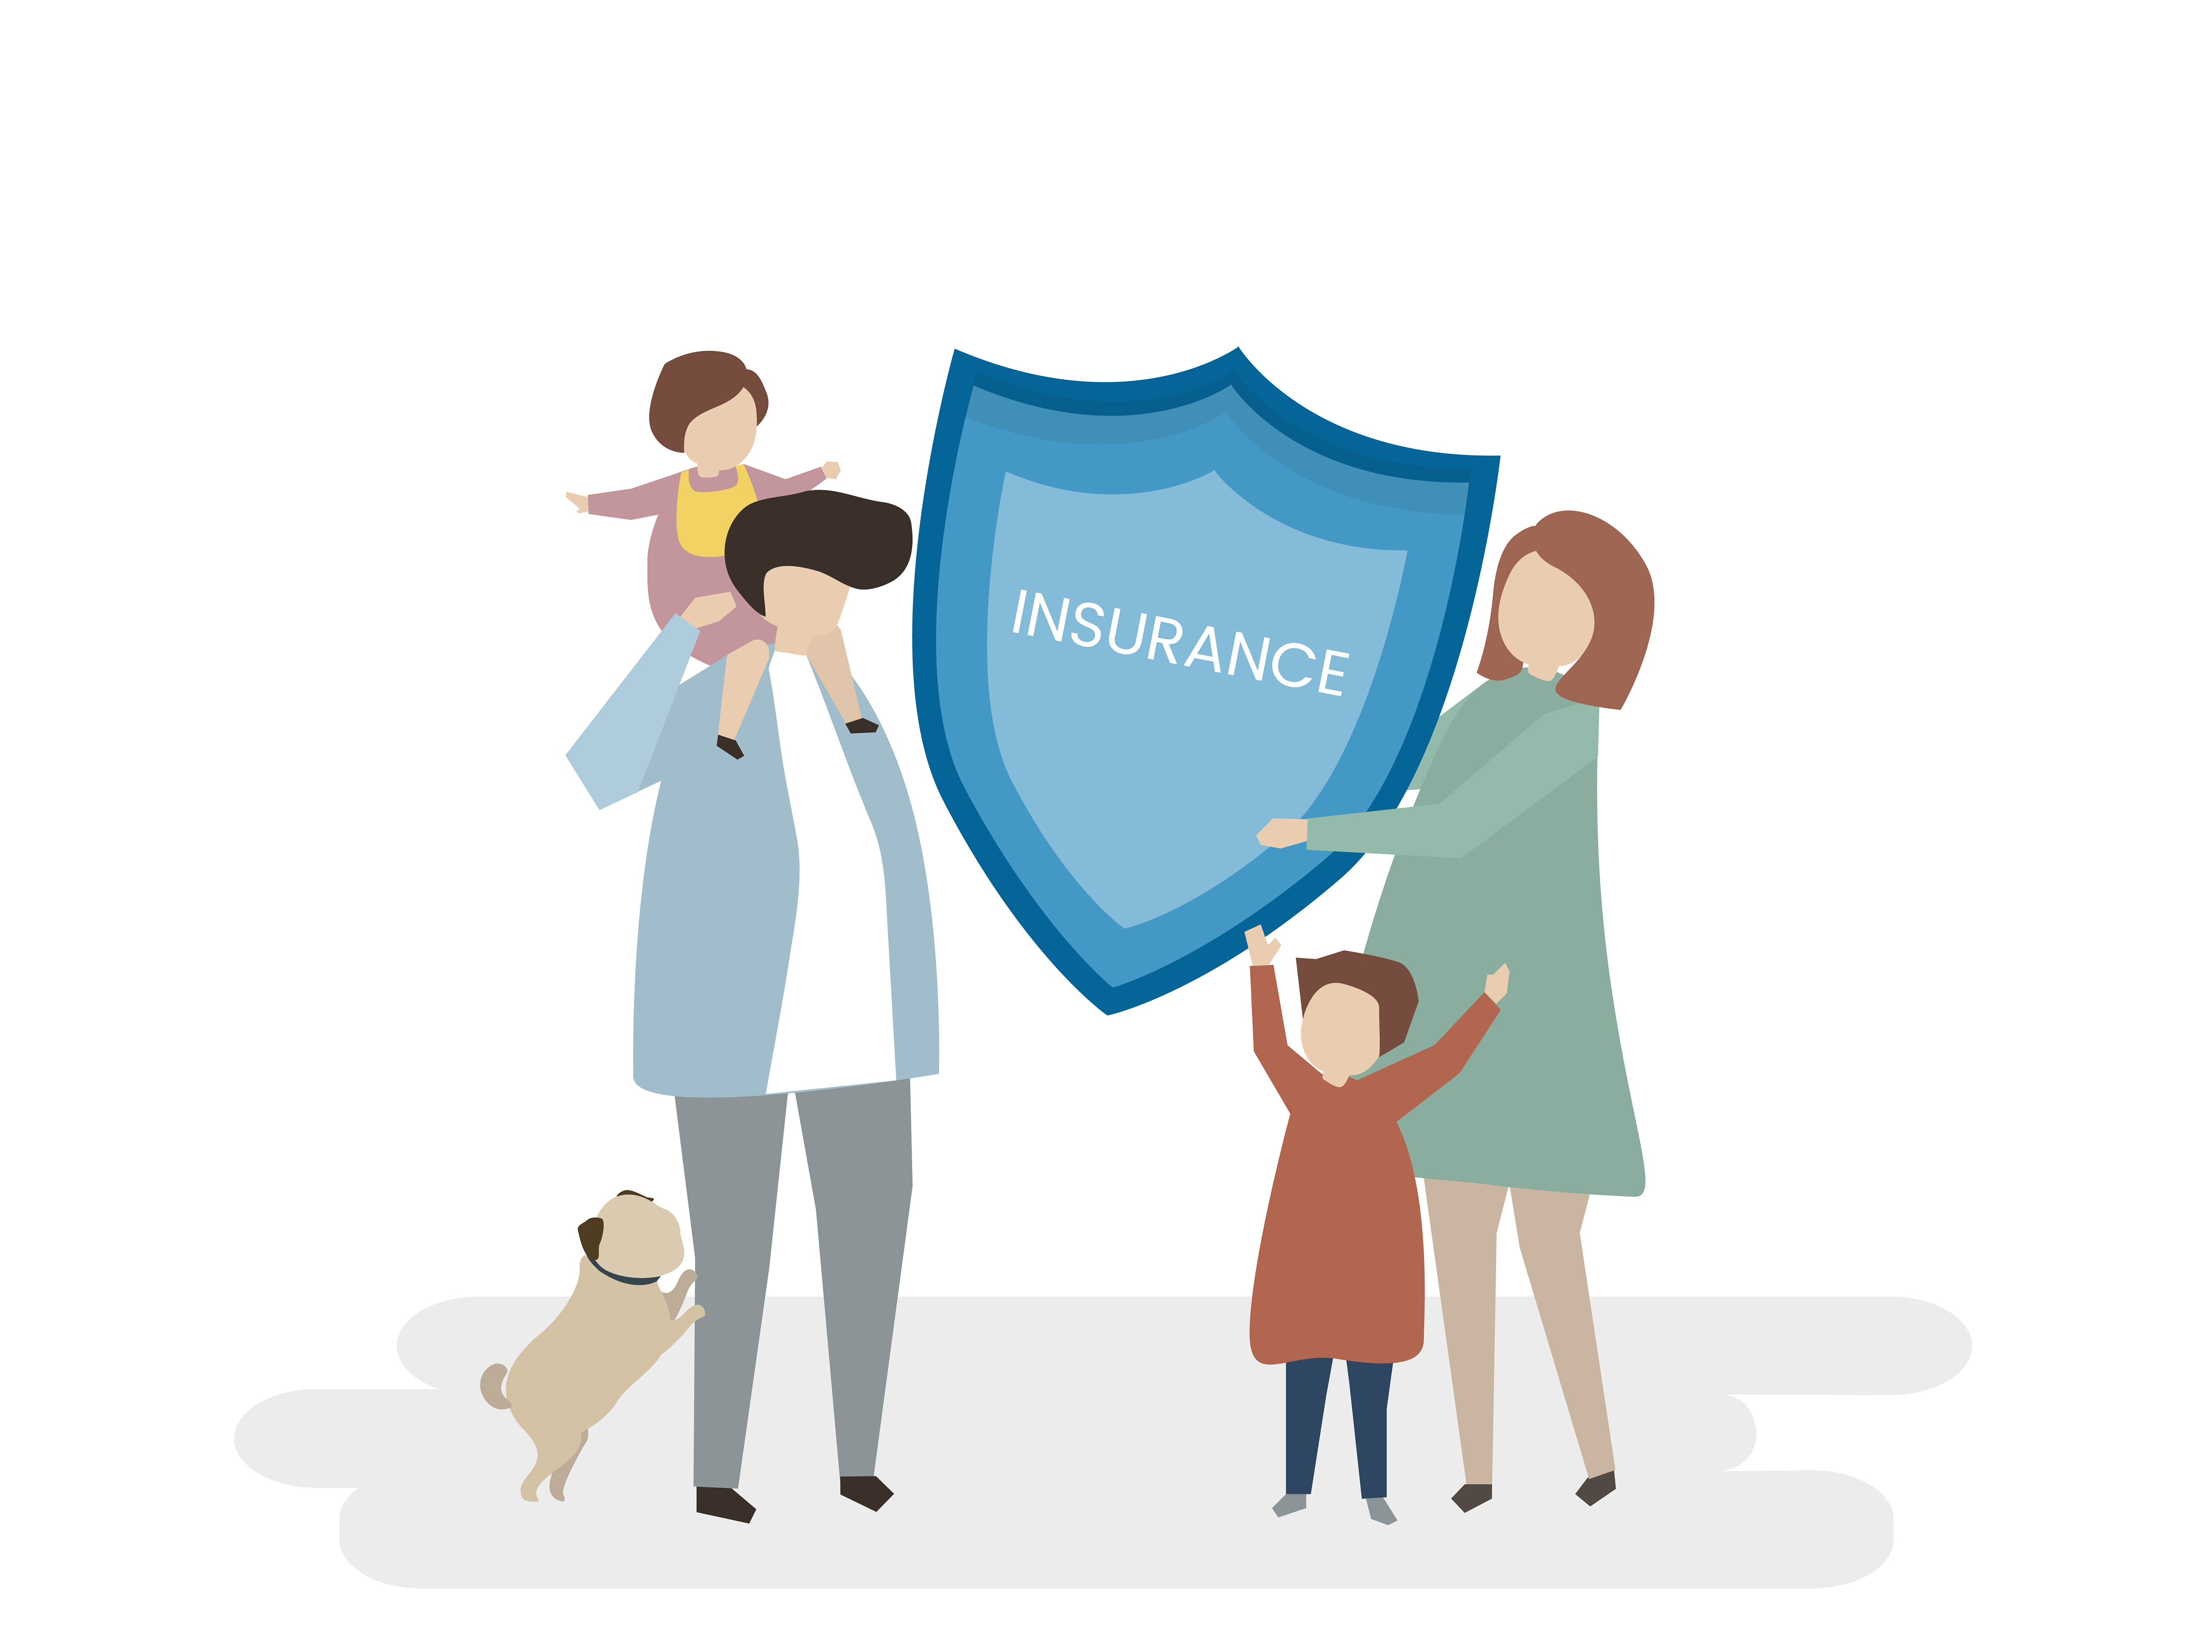 Illustration of insurance